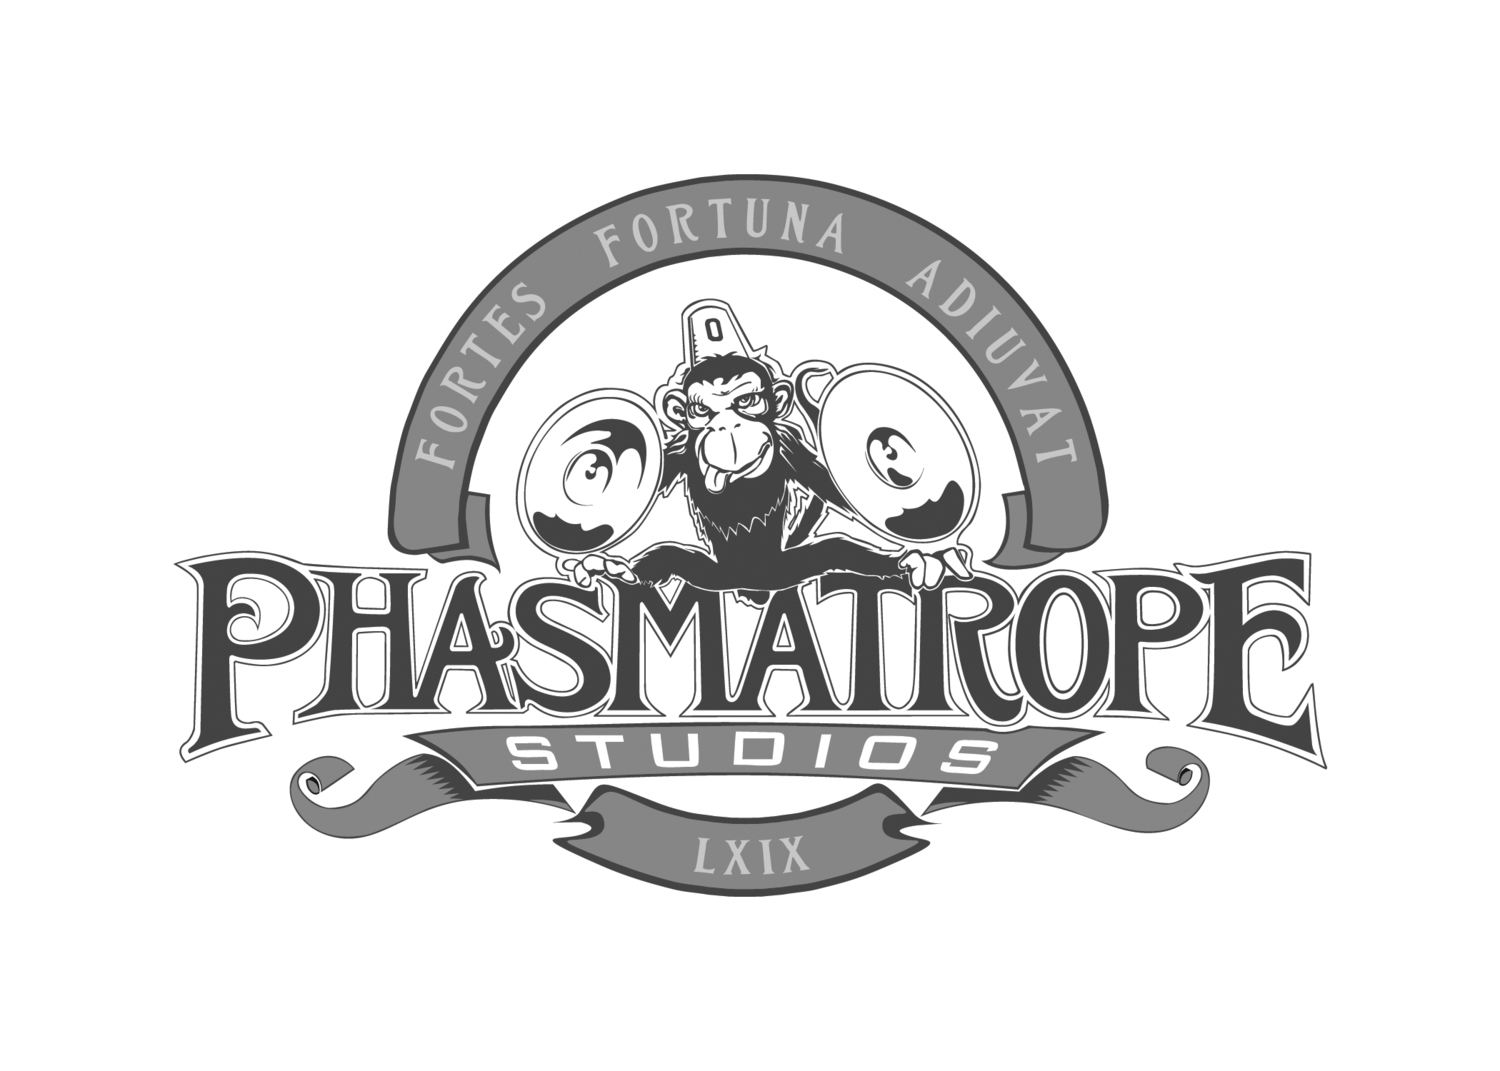 Phasmatrope Studios